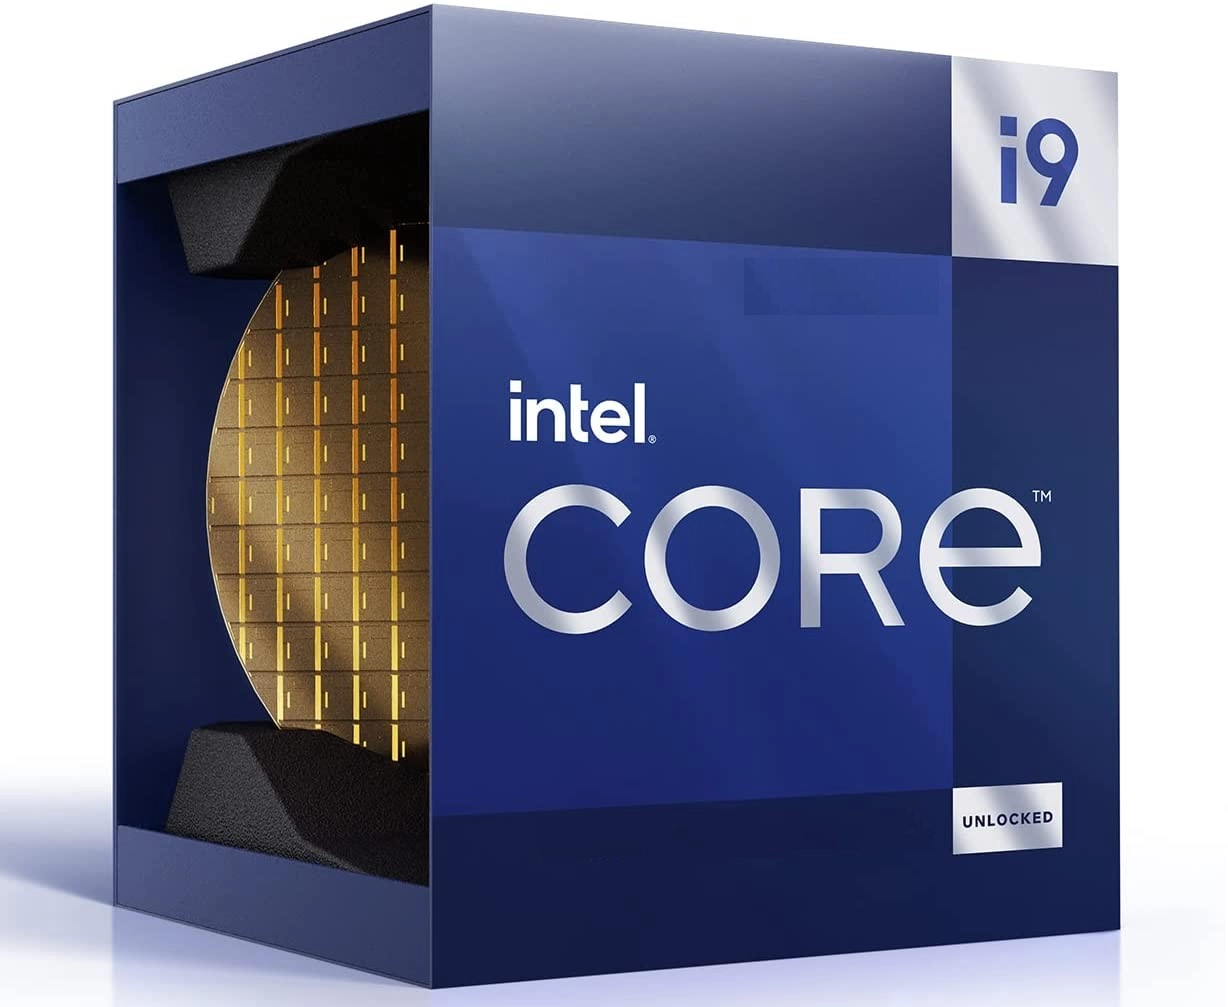 Intel® Core™ i9-13900, S1700, 2.0-5.6GHz, 24C (8P+16E) / 32T, 36MB L3 + 32MB L2 Cache, Intel® UHD Graphics 770, 10nm 65W, Box